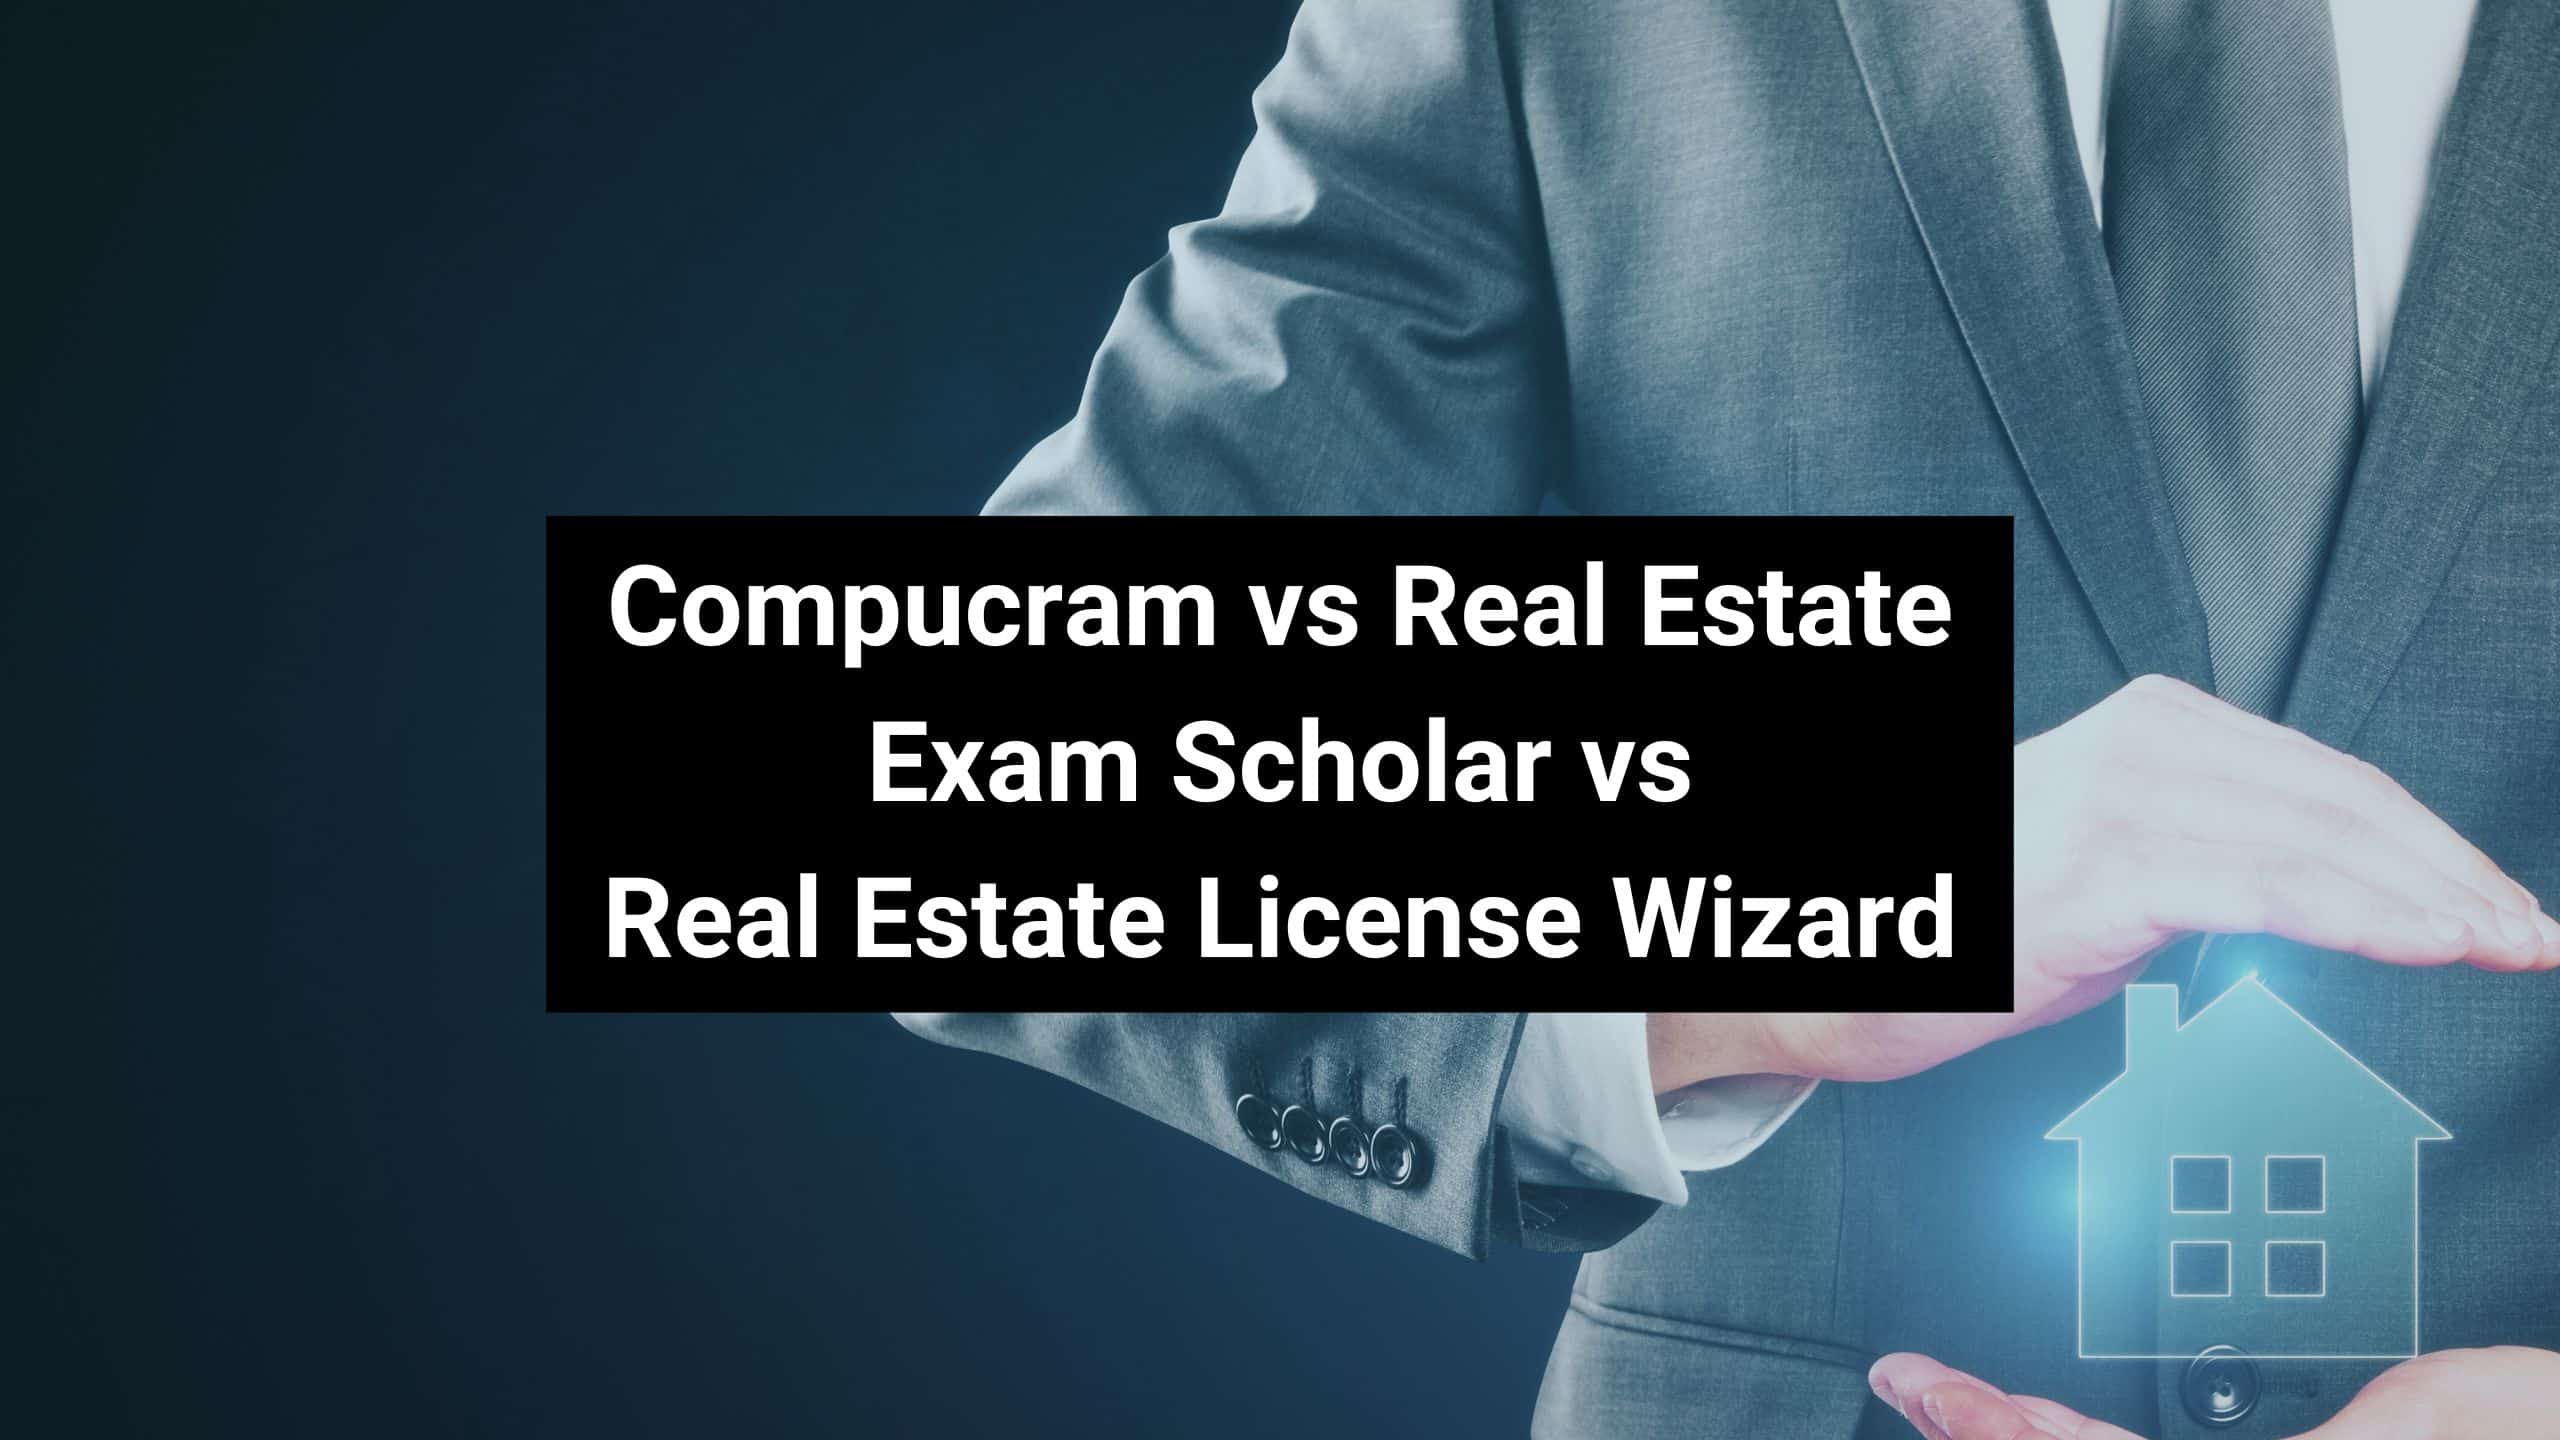 Compucram vs Real Estate Exam Scholar vs Real Estate License Wizard